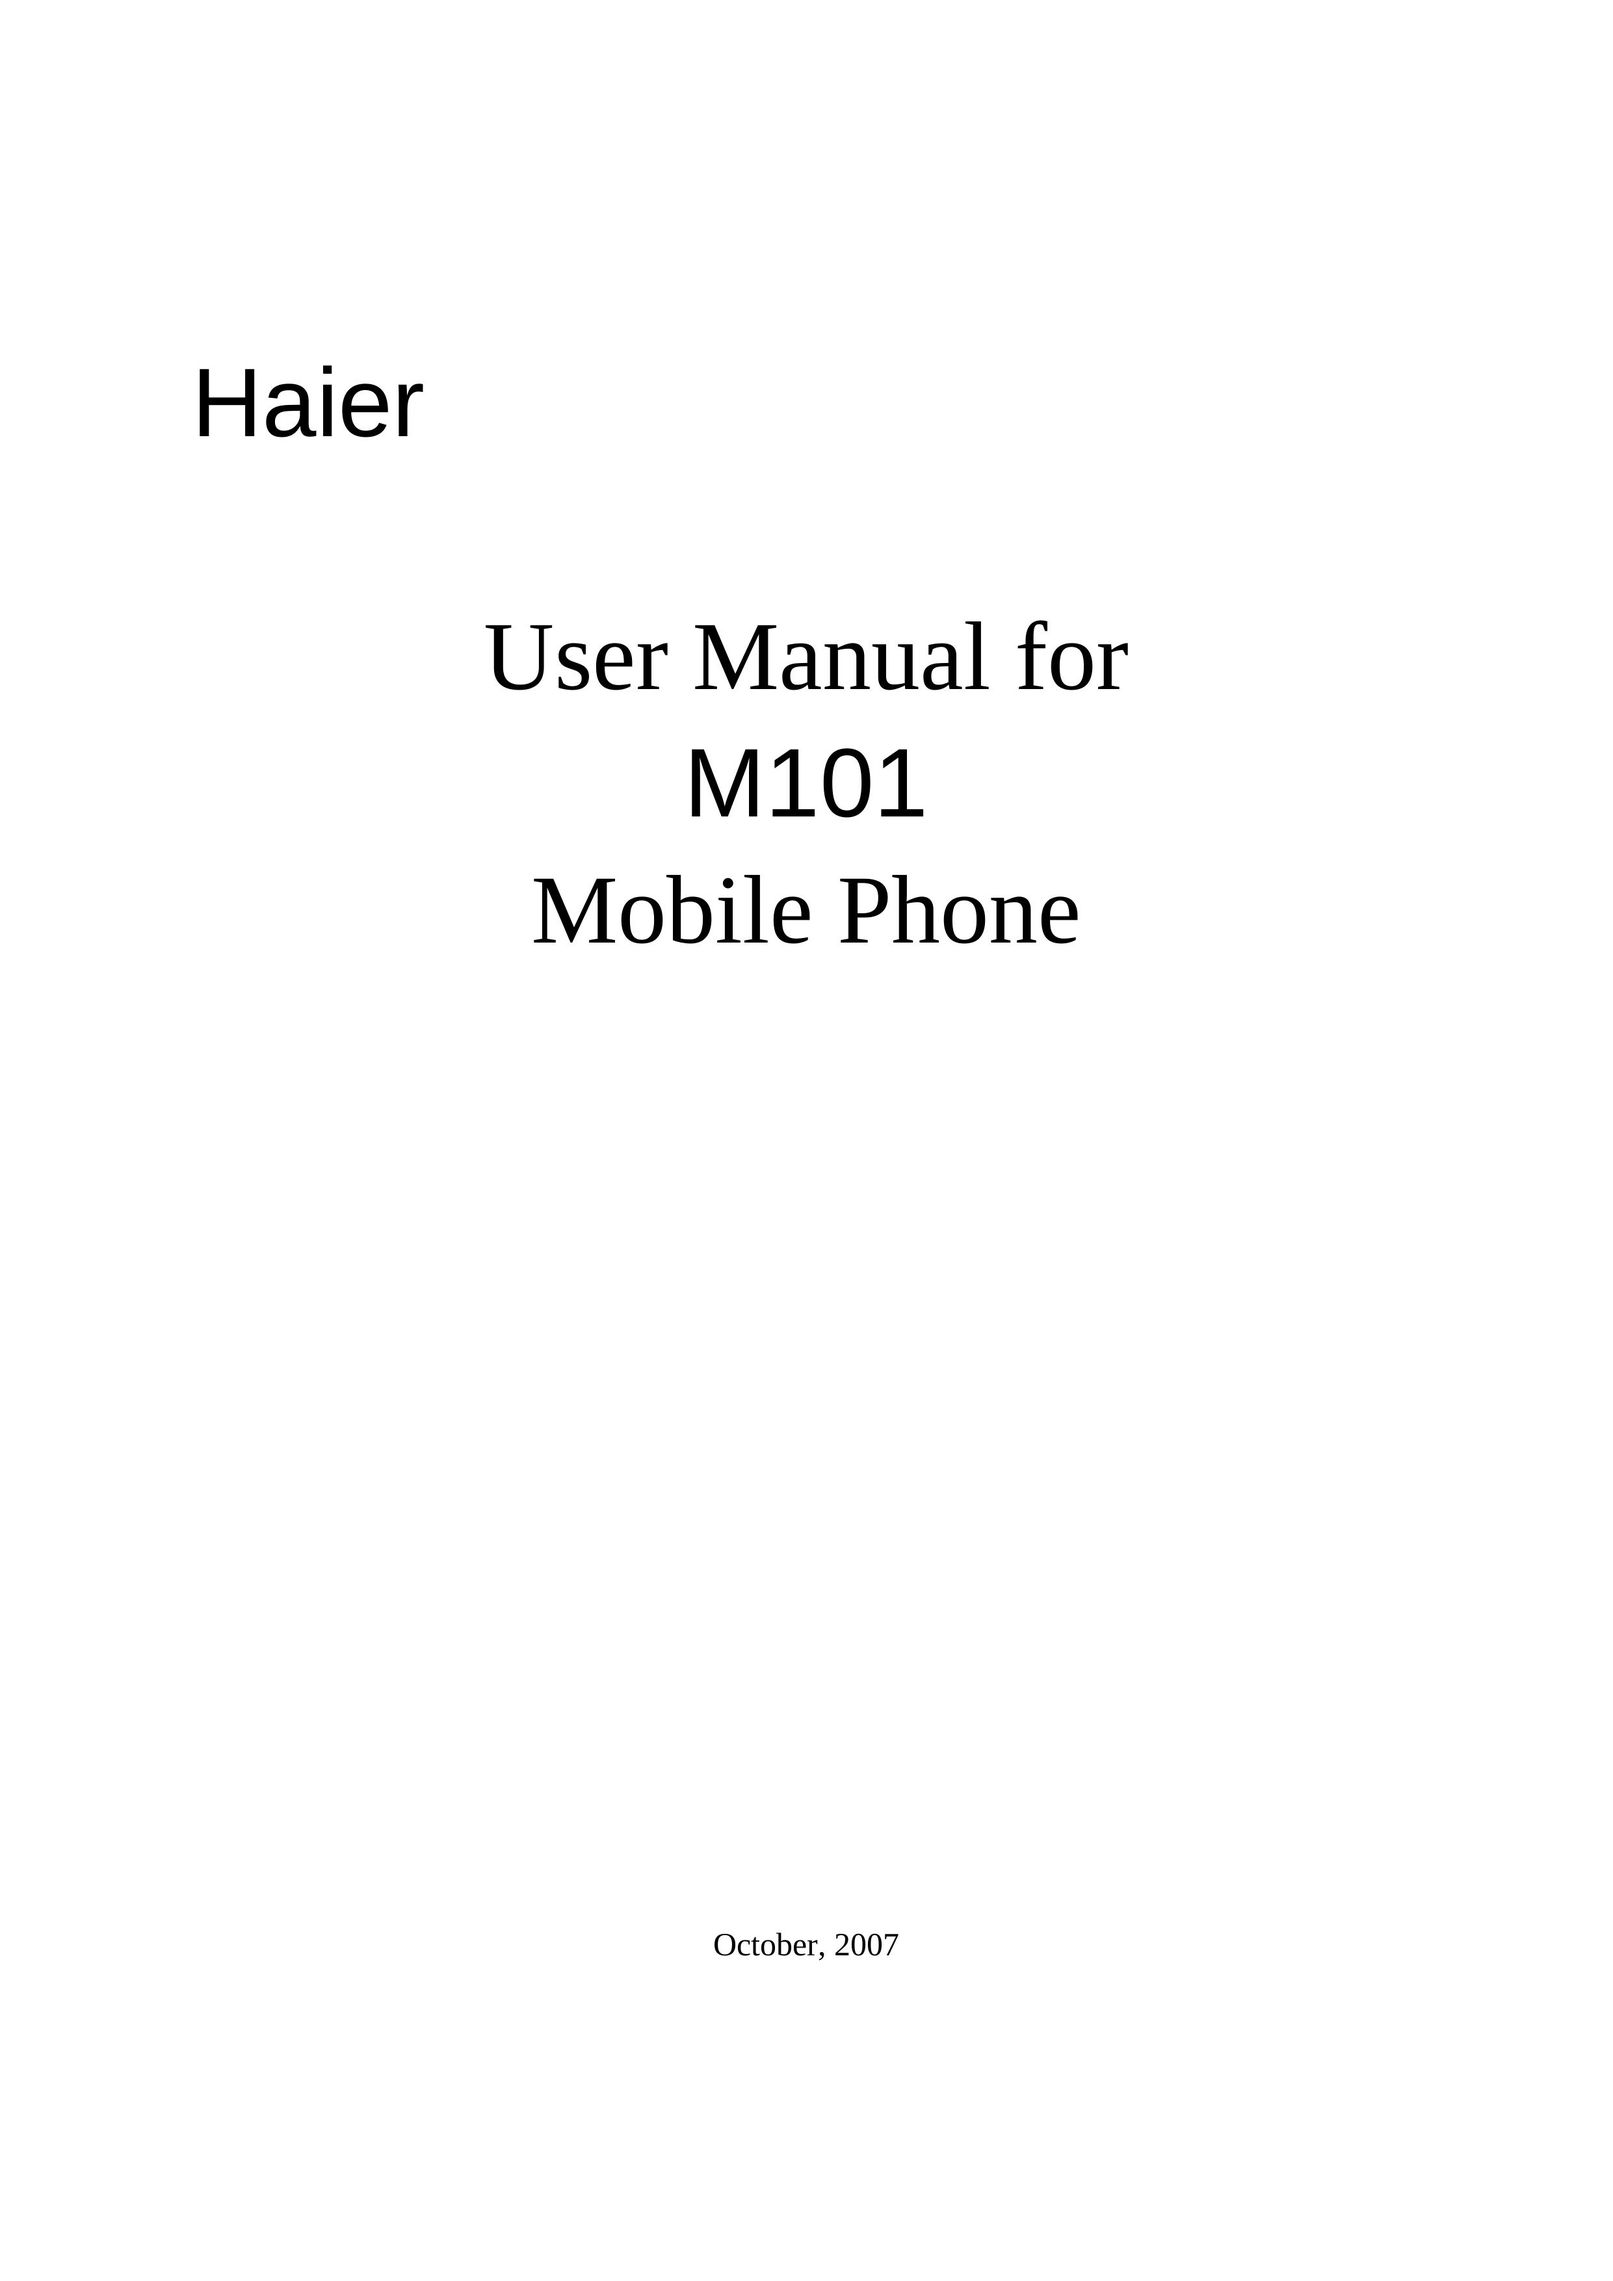 Haier M101 Cell Phone User Manual